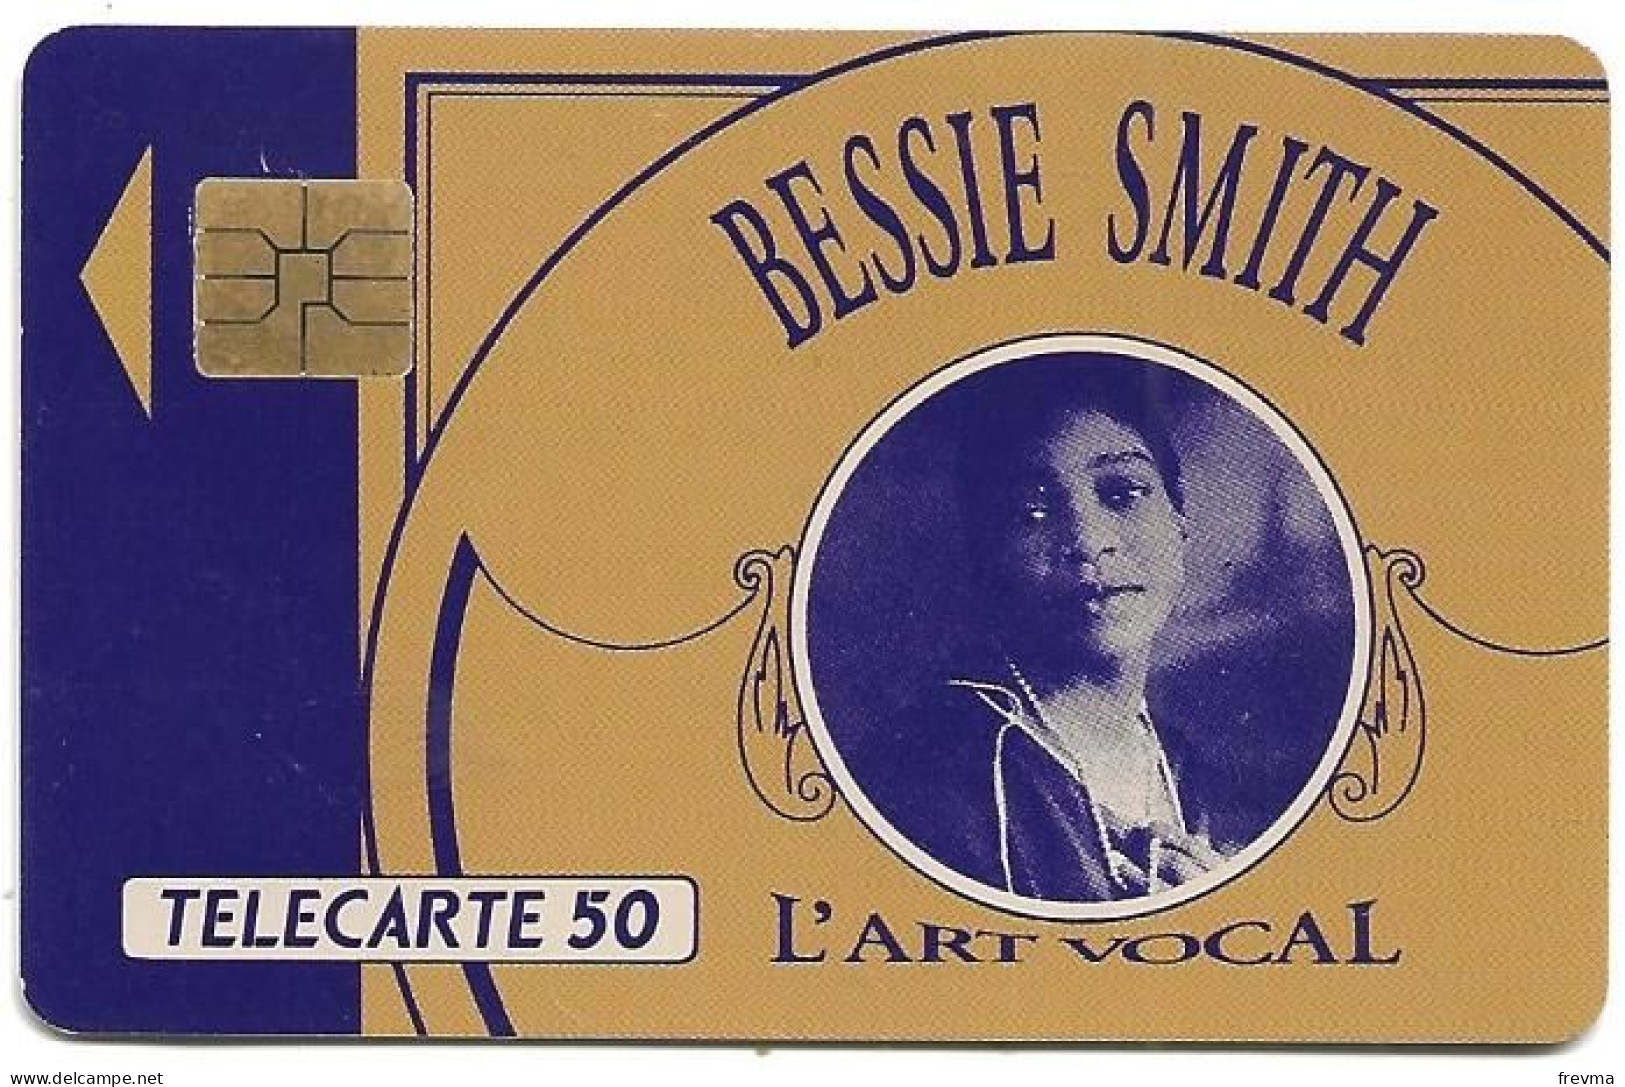 Telecarte F231 Bessie Smith 50 Unités Luxe SO3 - 1992